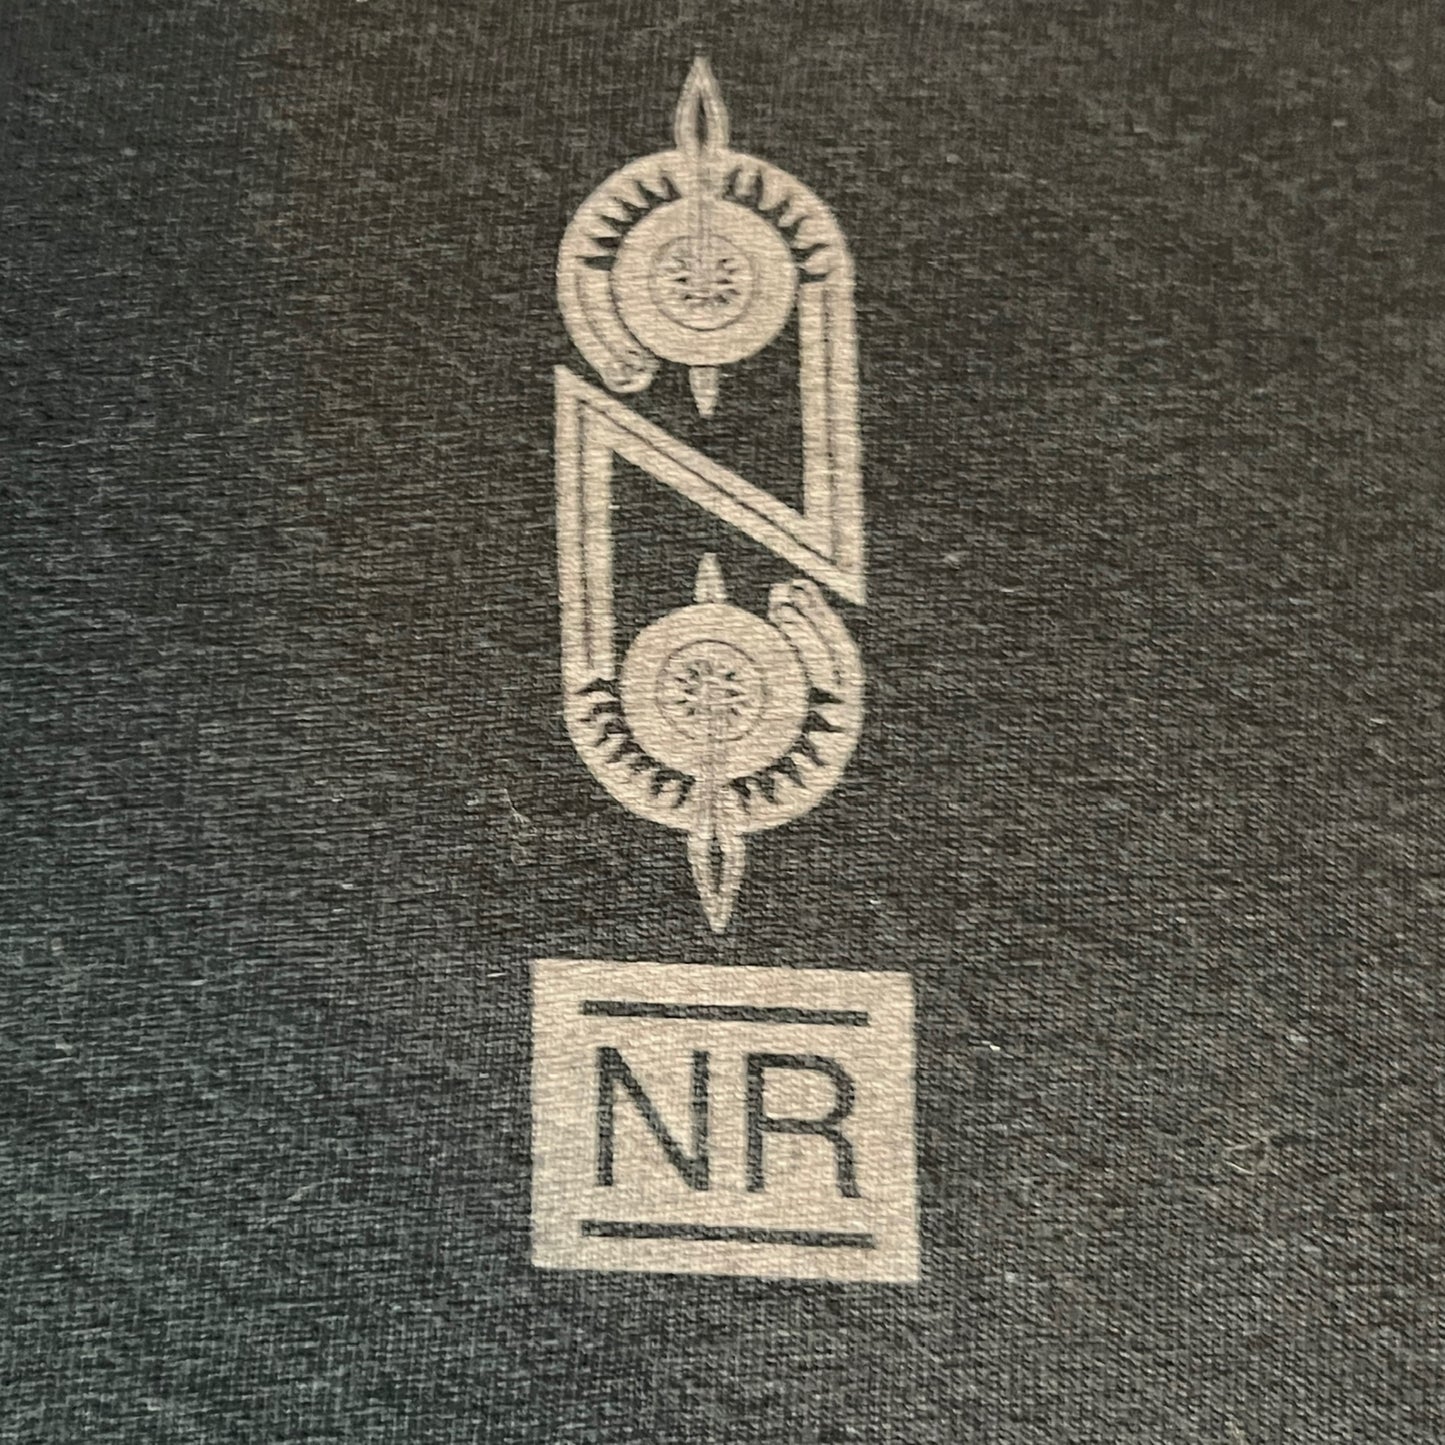 Neurot Recordings Black Shirt Size Medium Neurosis